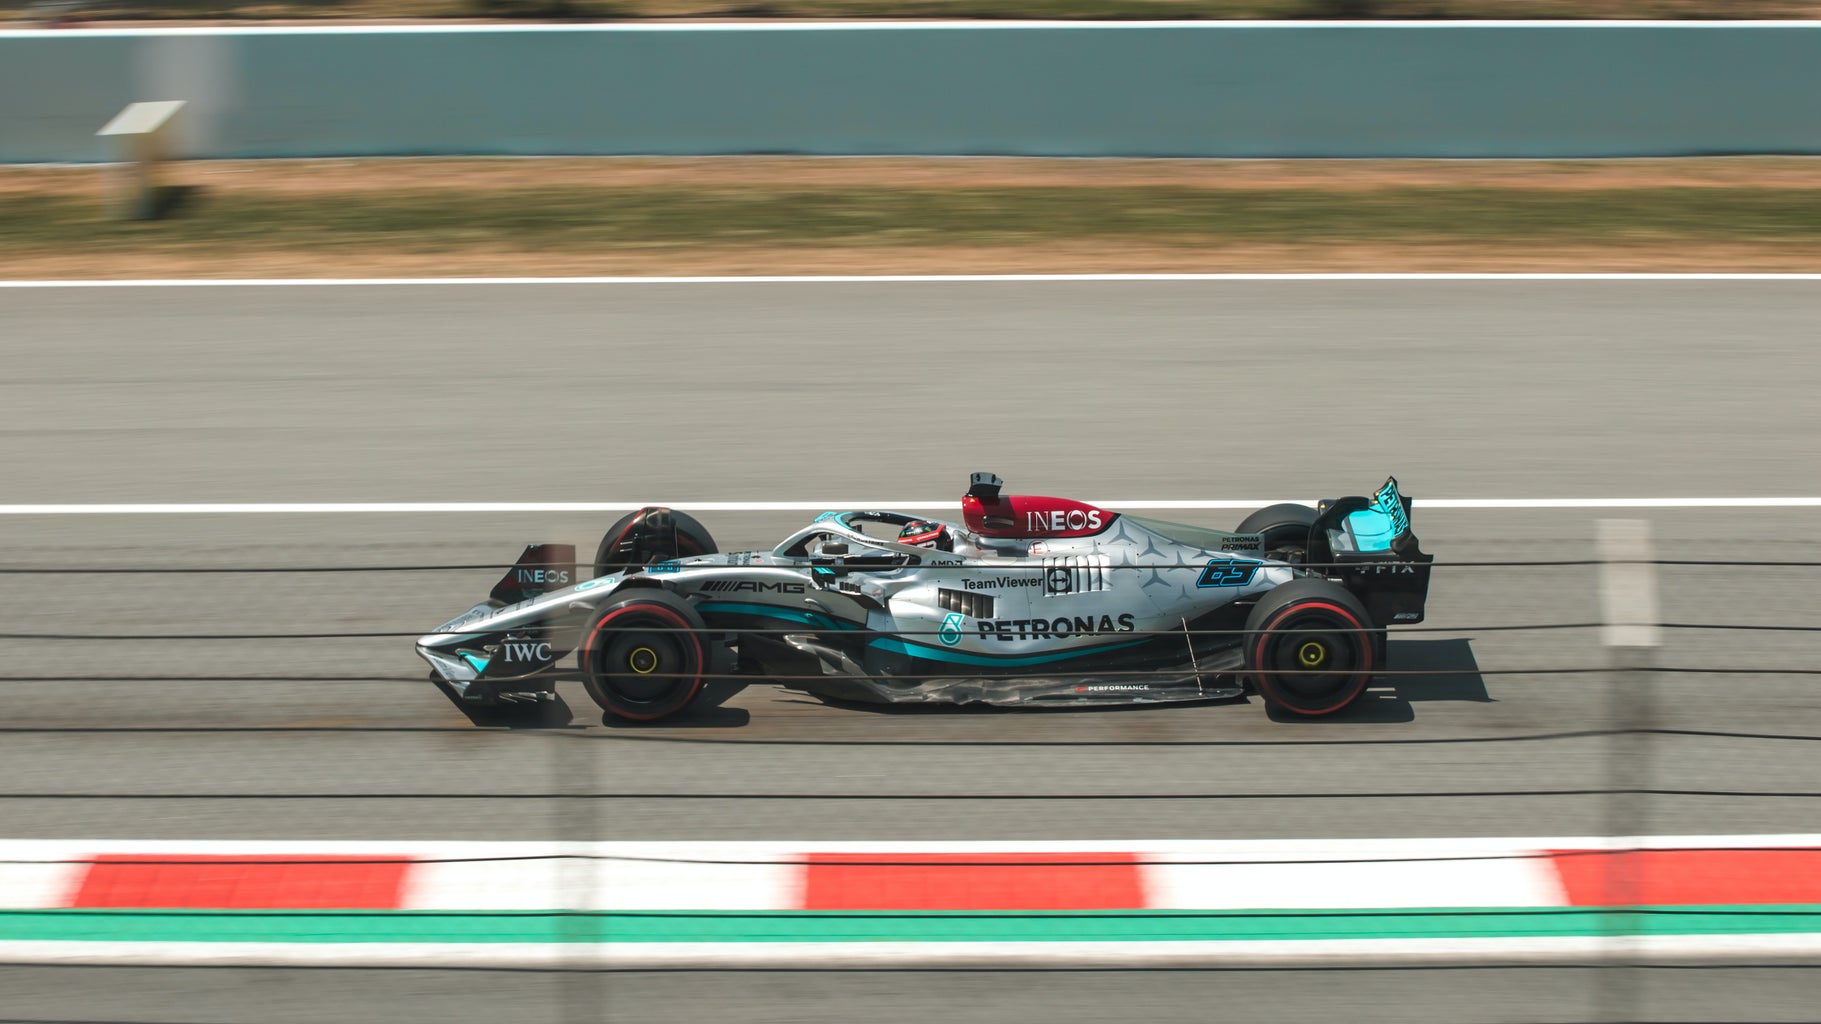 Petronas racing on track F1